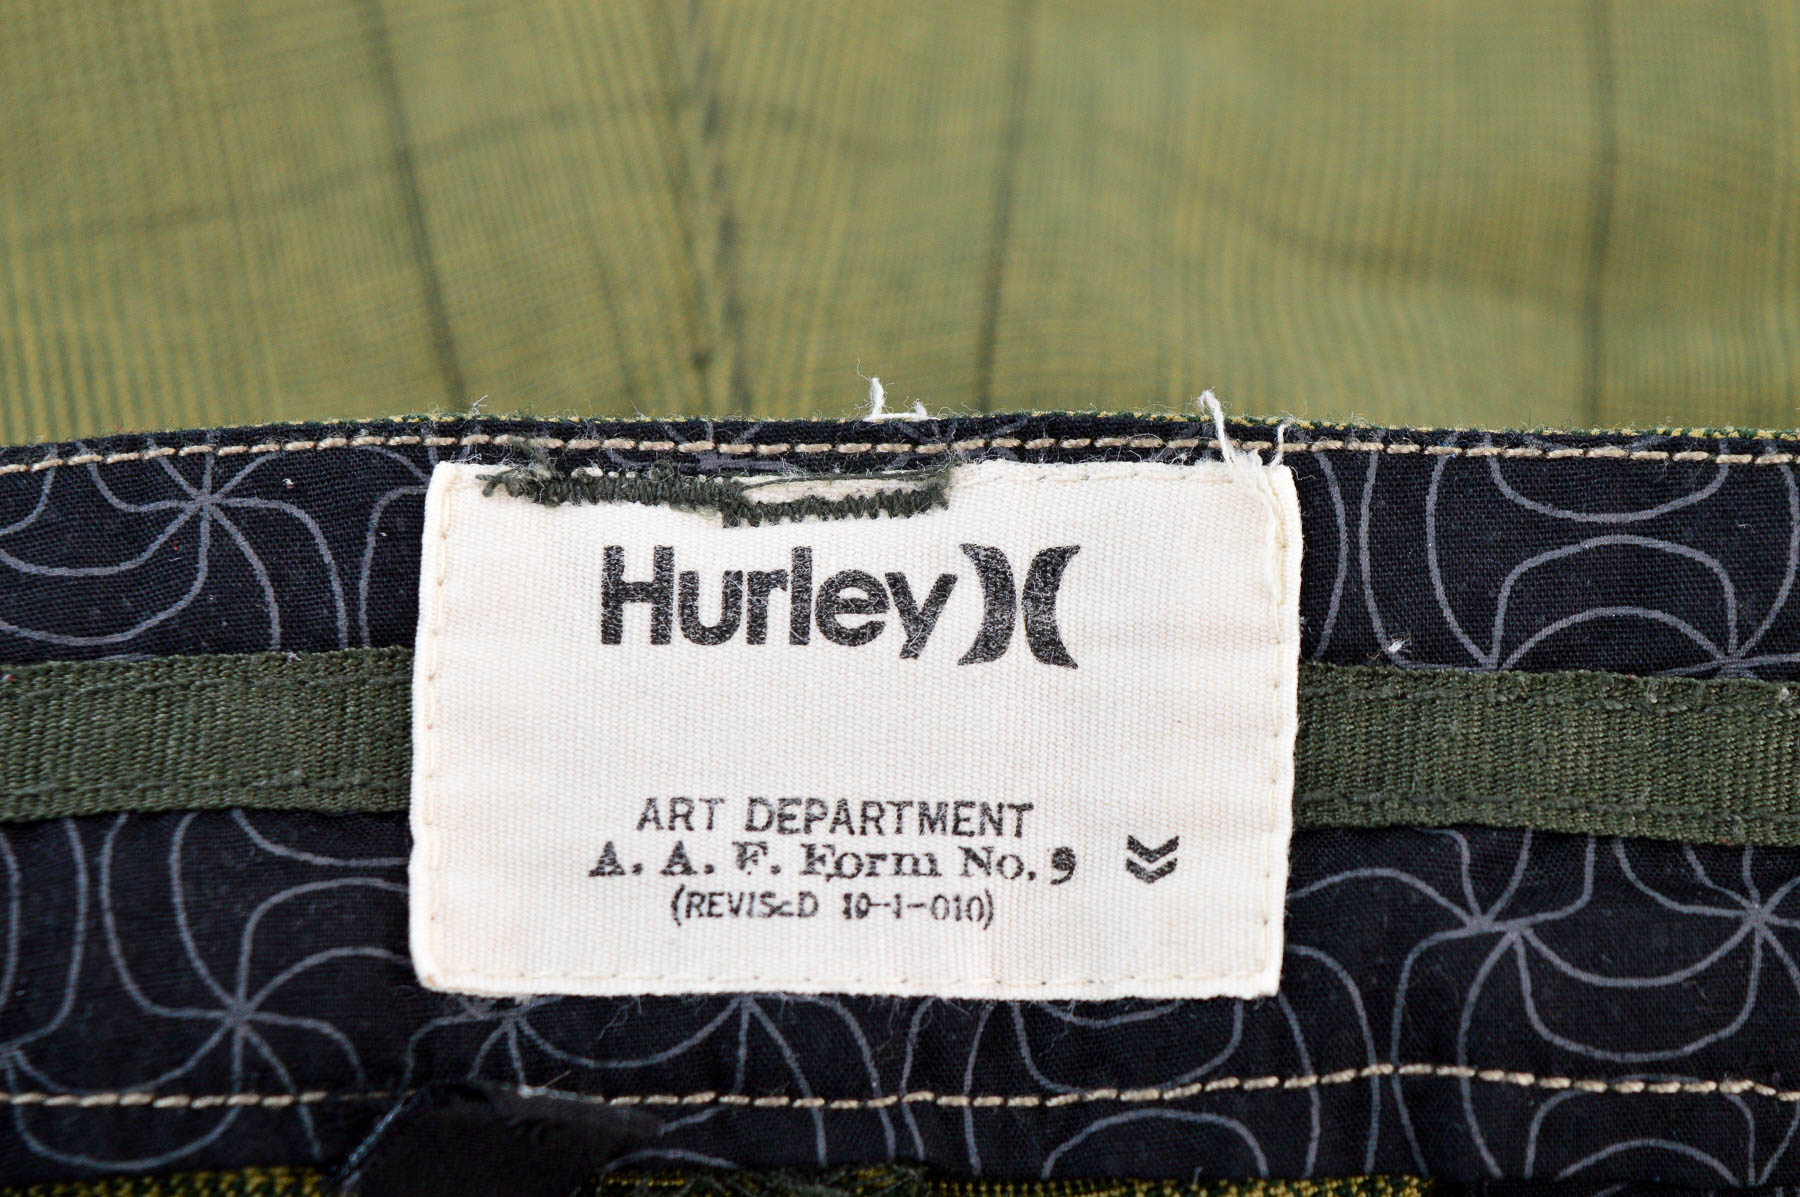 Men's shorts - Hurley - 2